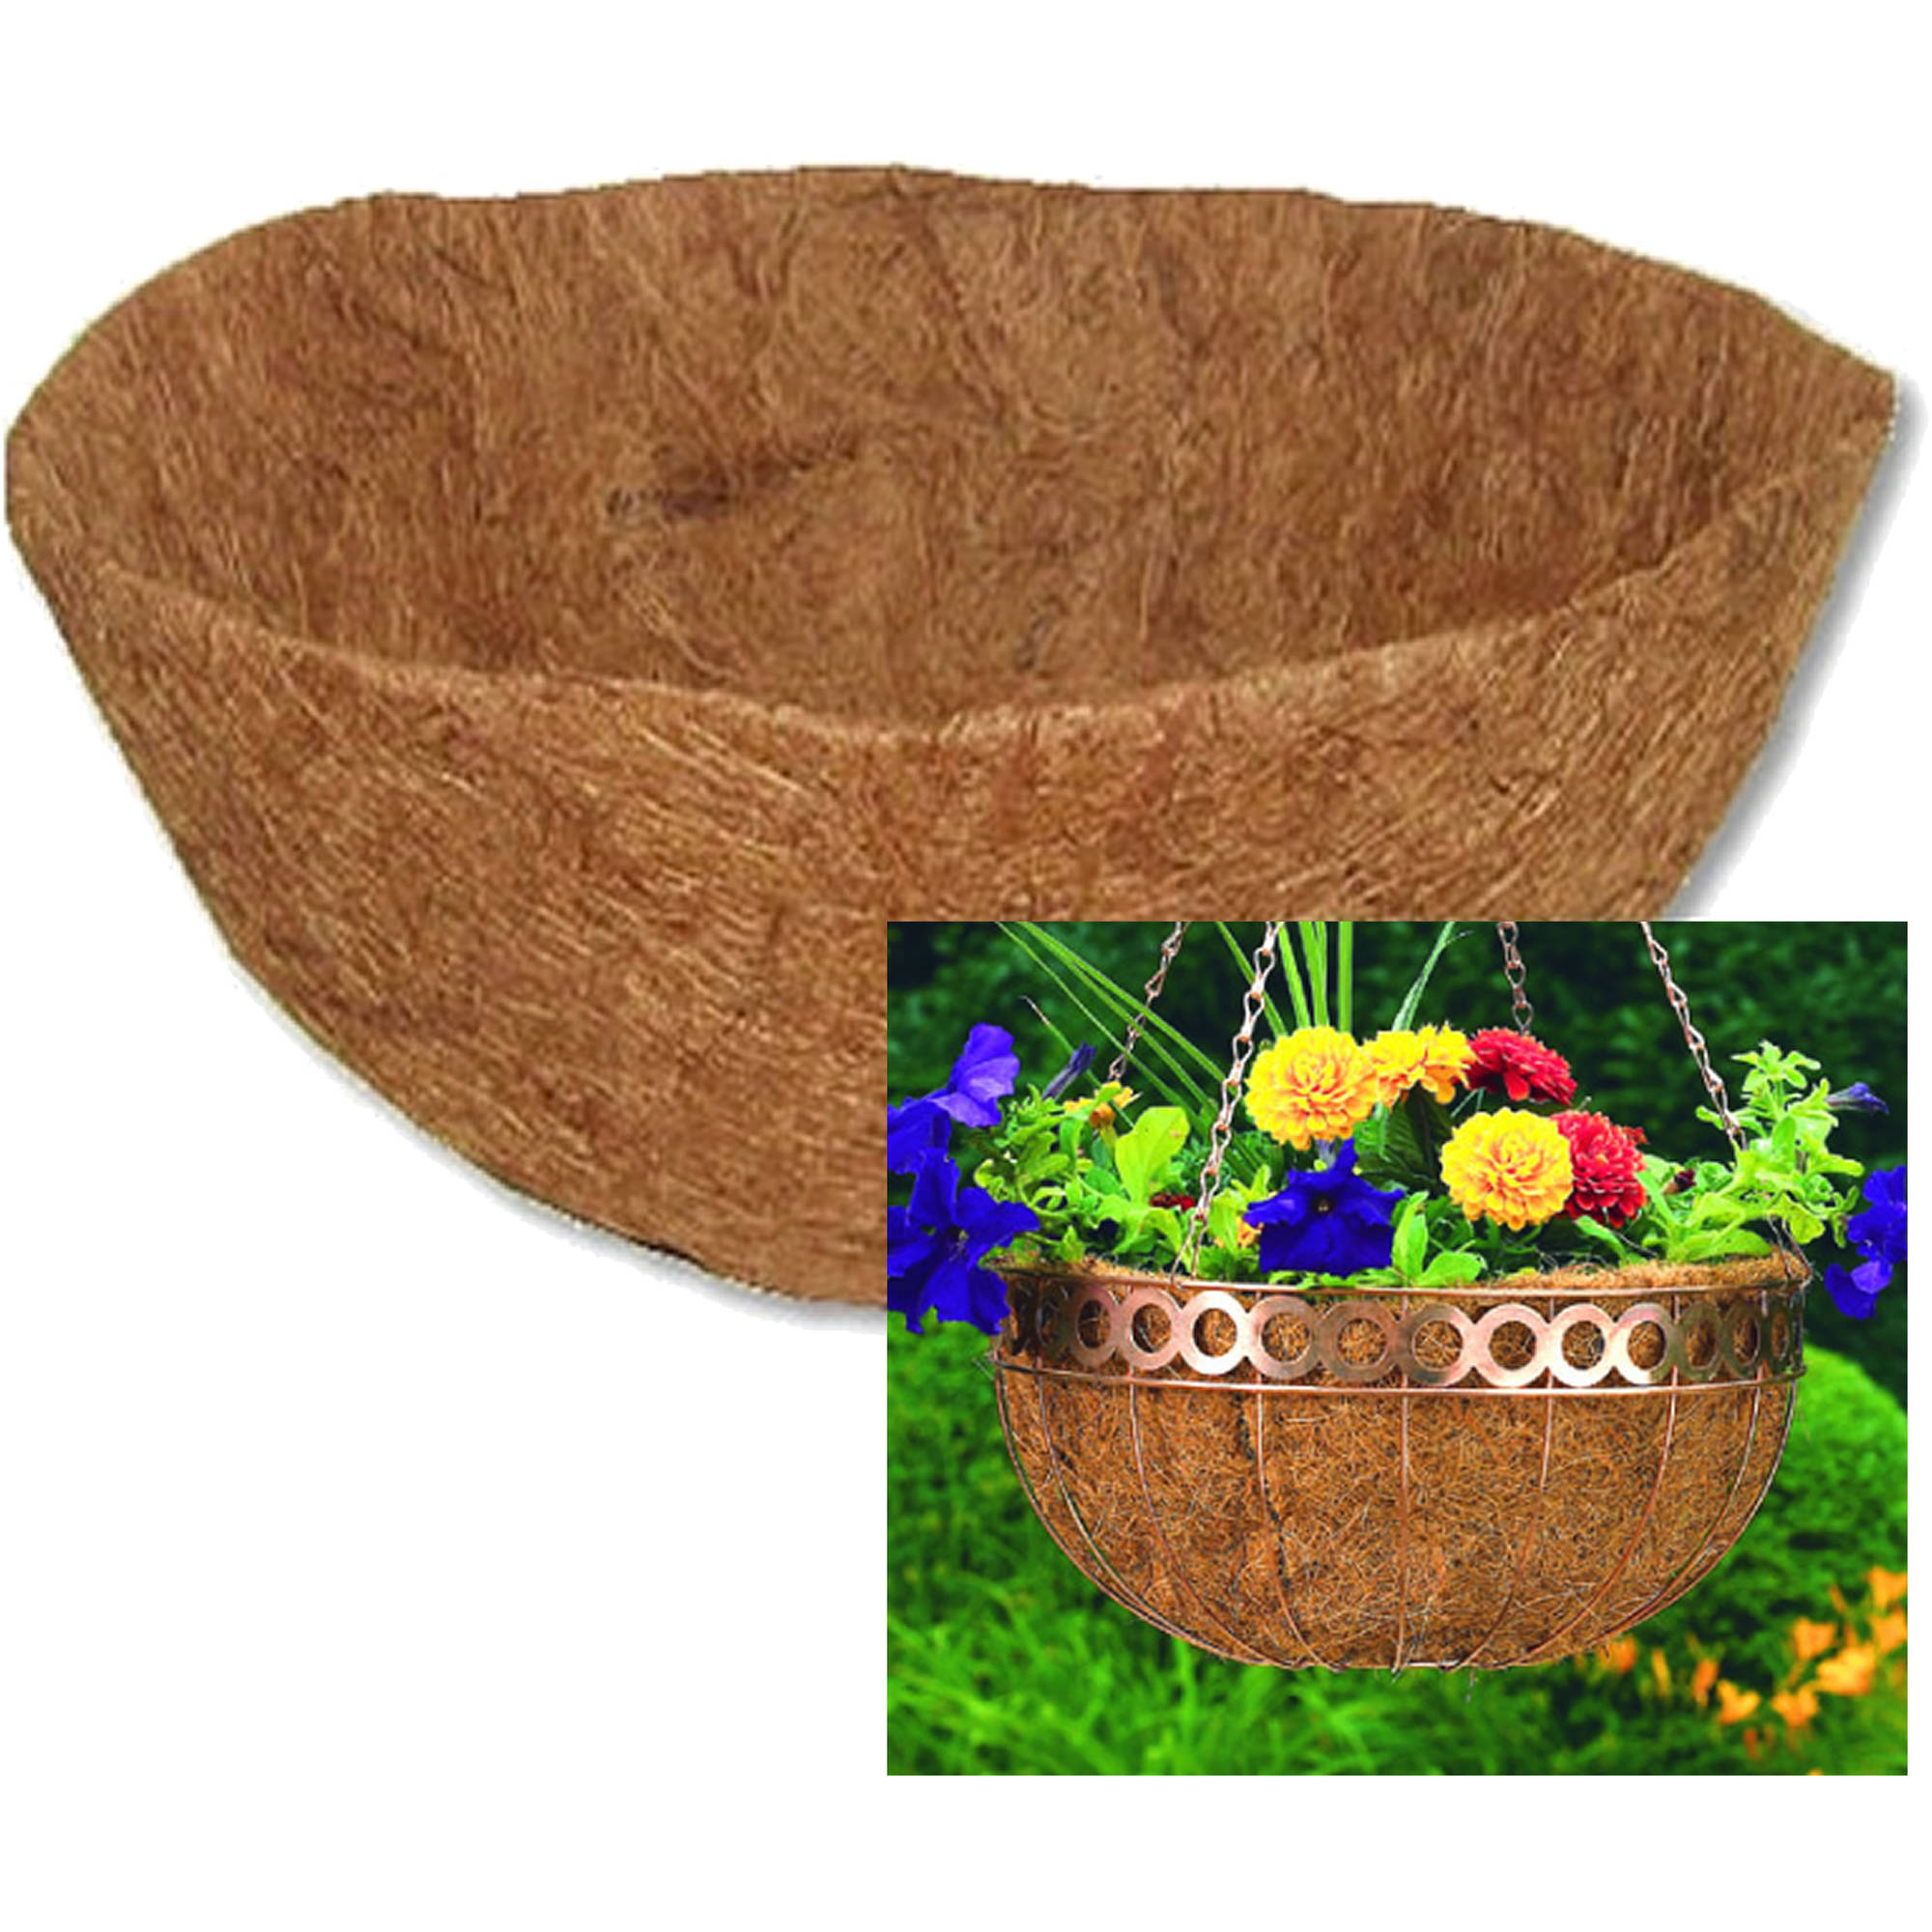 Coco Peat Bowl Pot